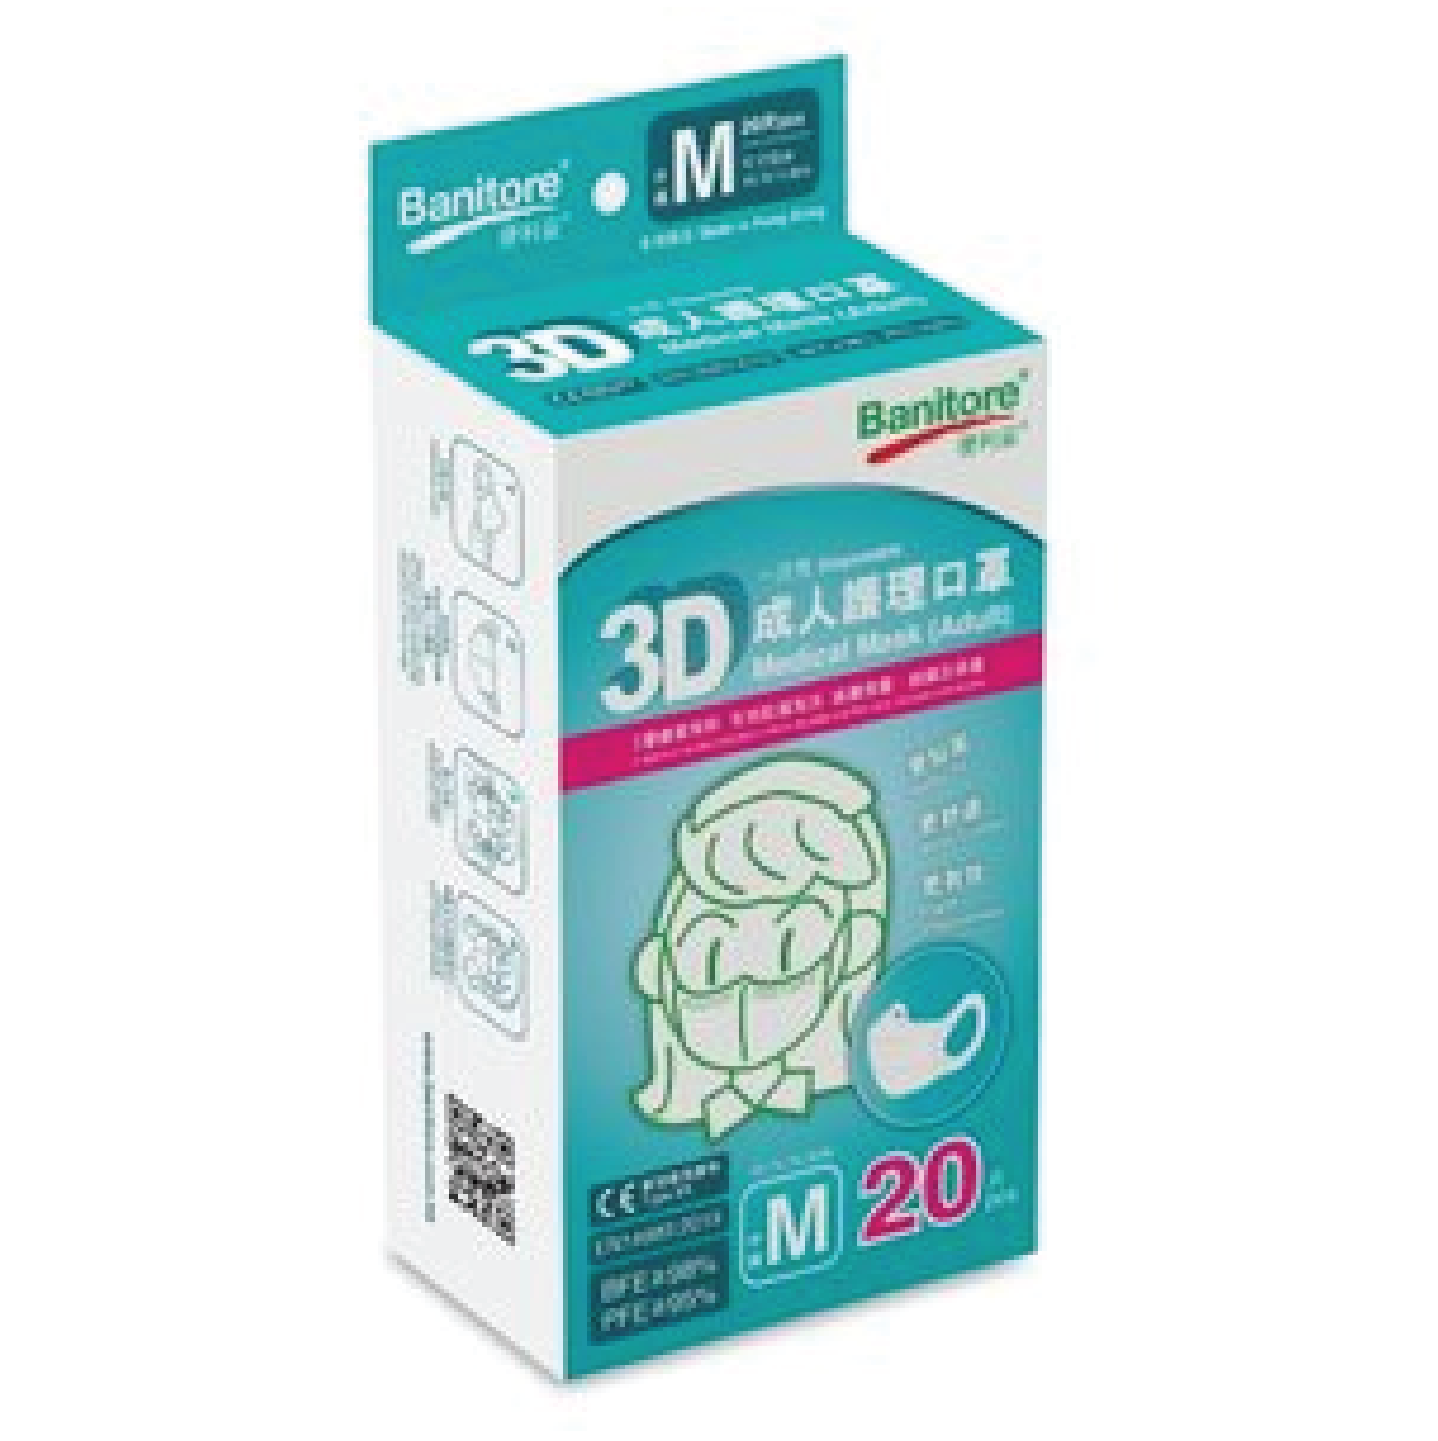 BANITORE 3D FACE MASK ADULT SIZE M (WHITE) 20 Pcs 便利妥 立體型成人口罩中碼綠盒 白色 20片裝